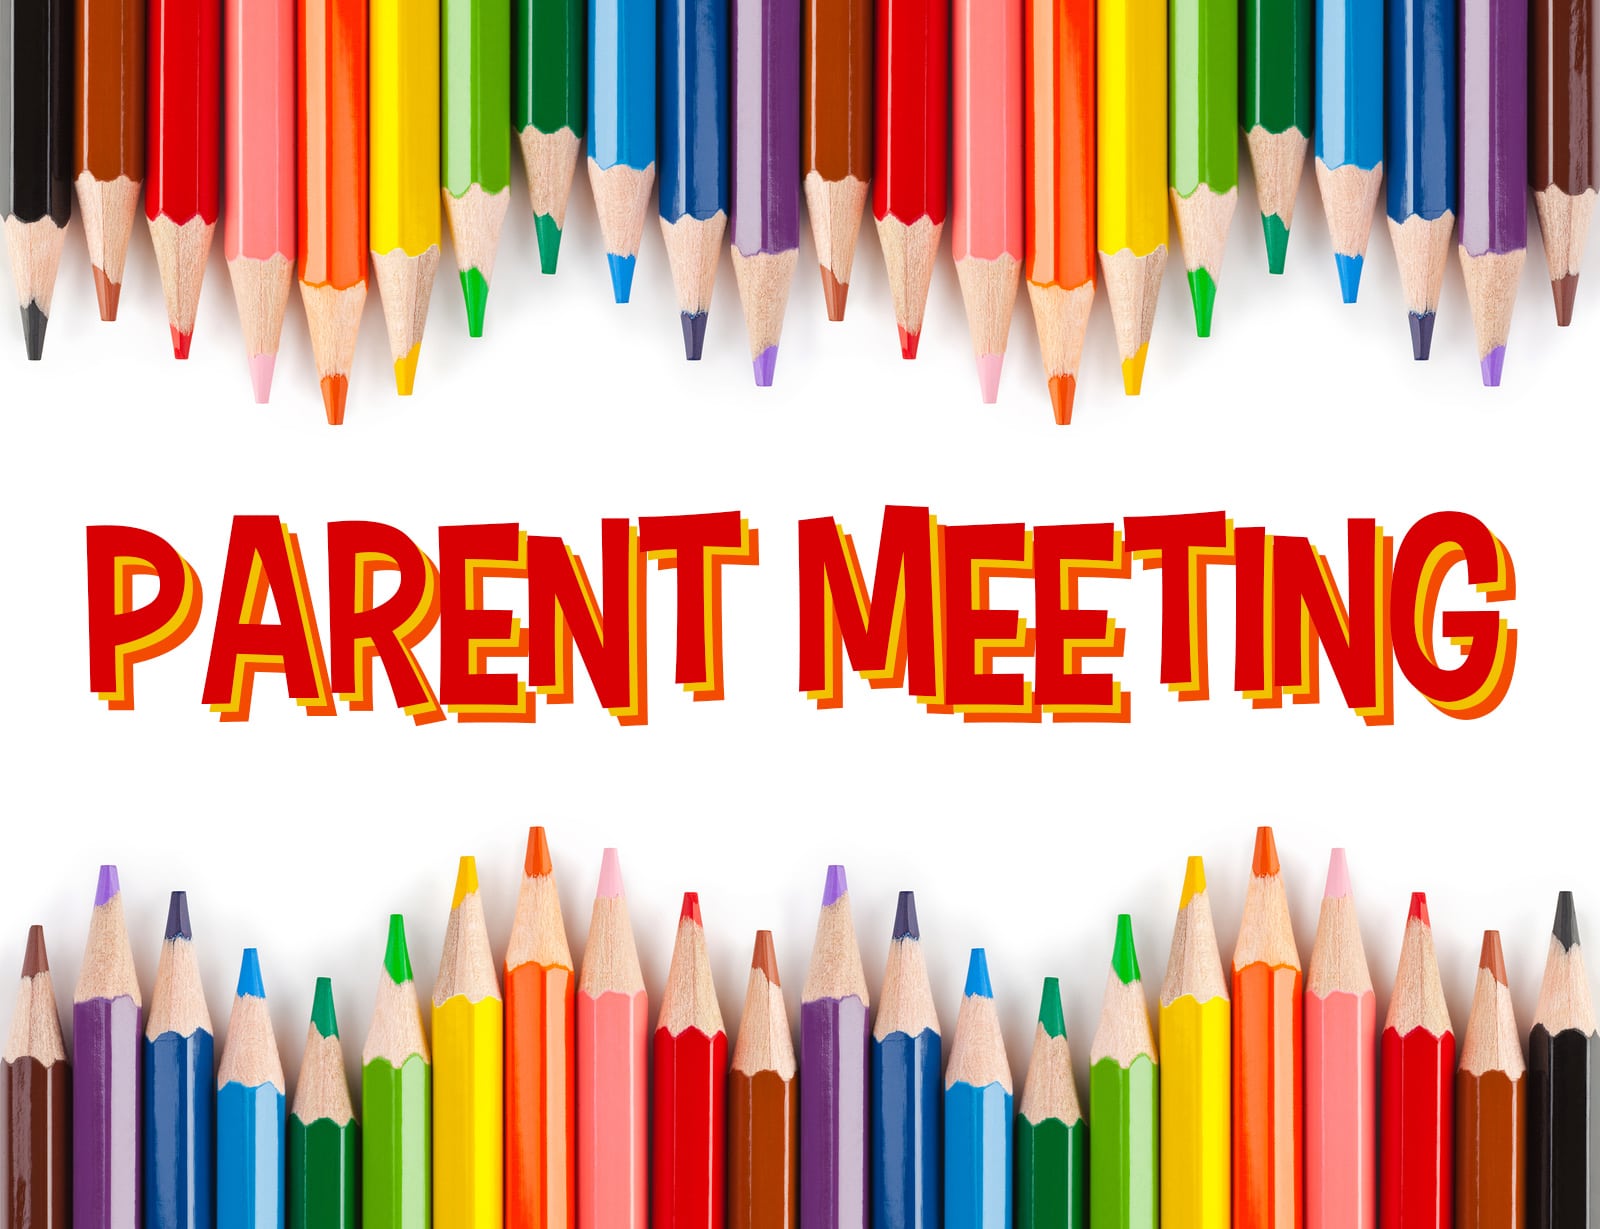 parent meeting images